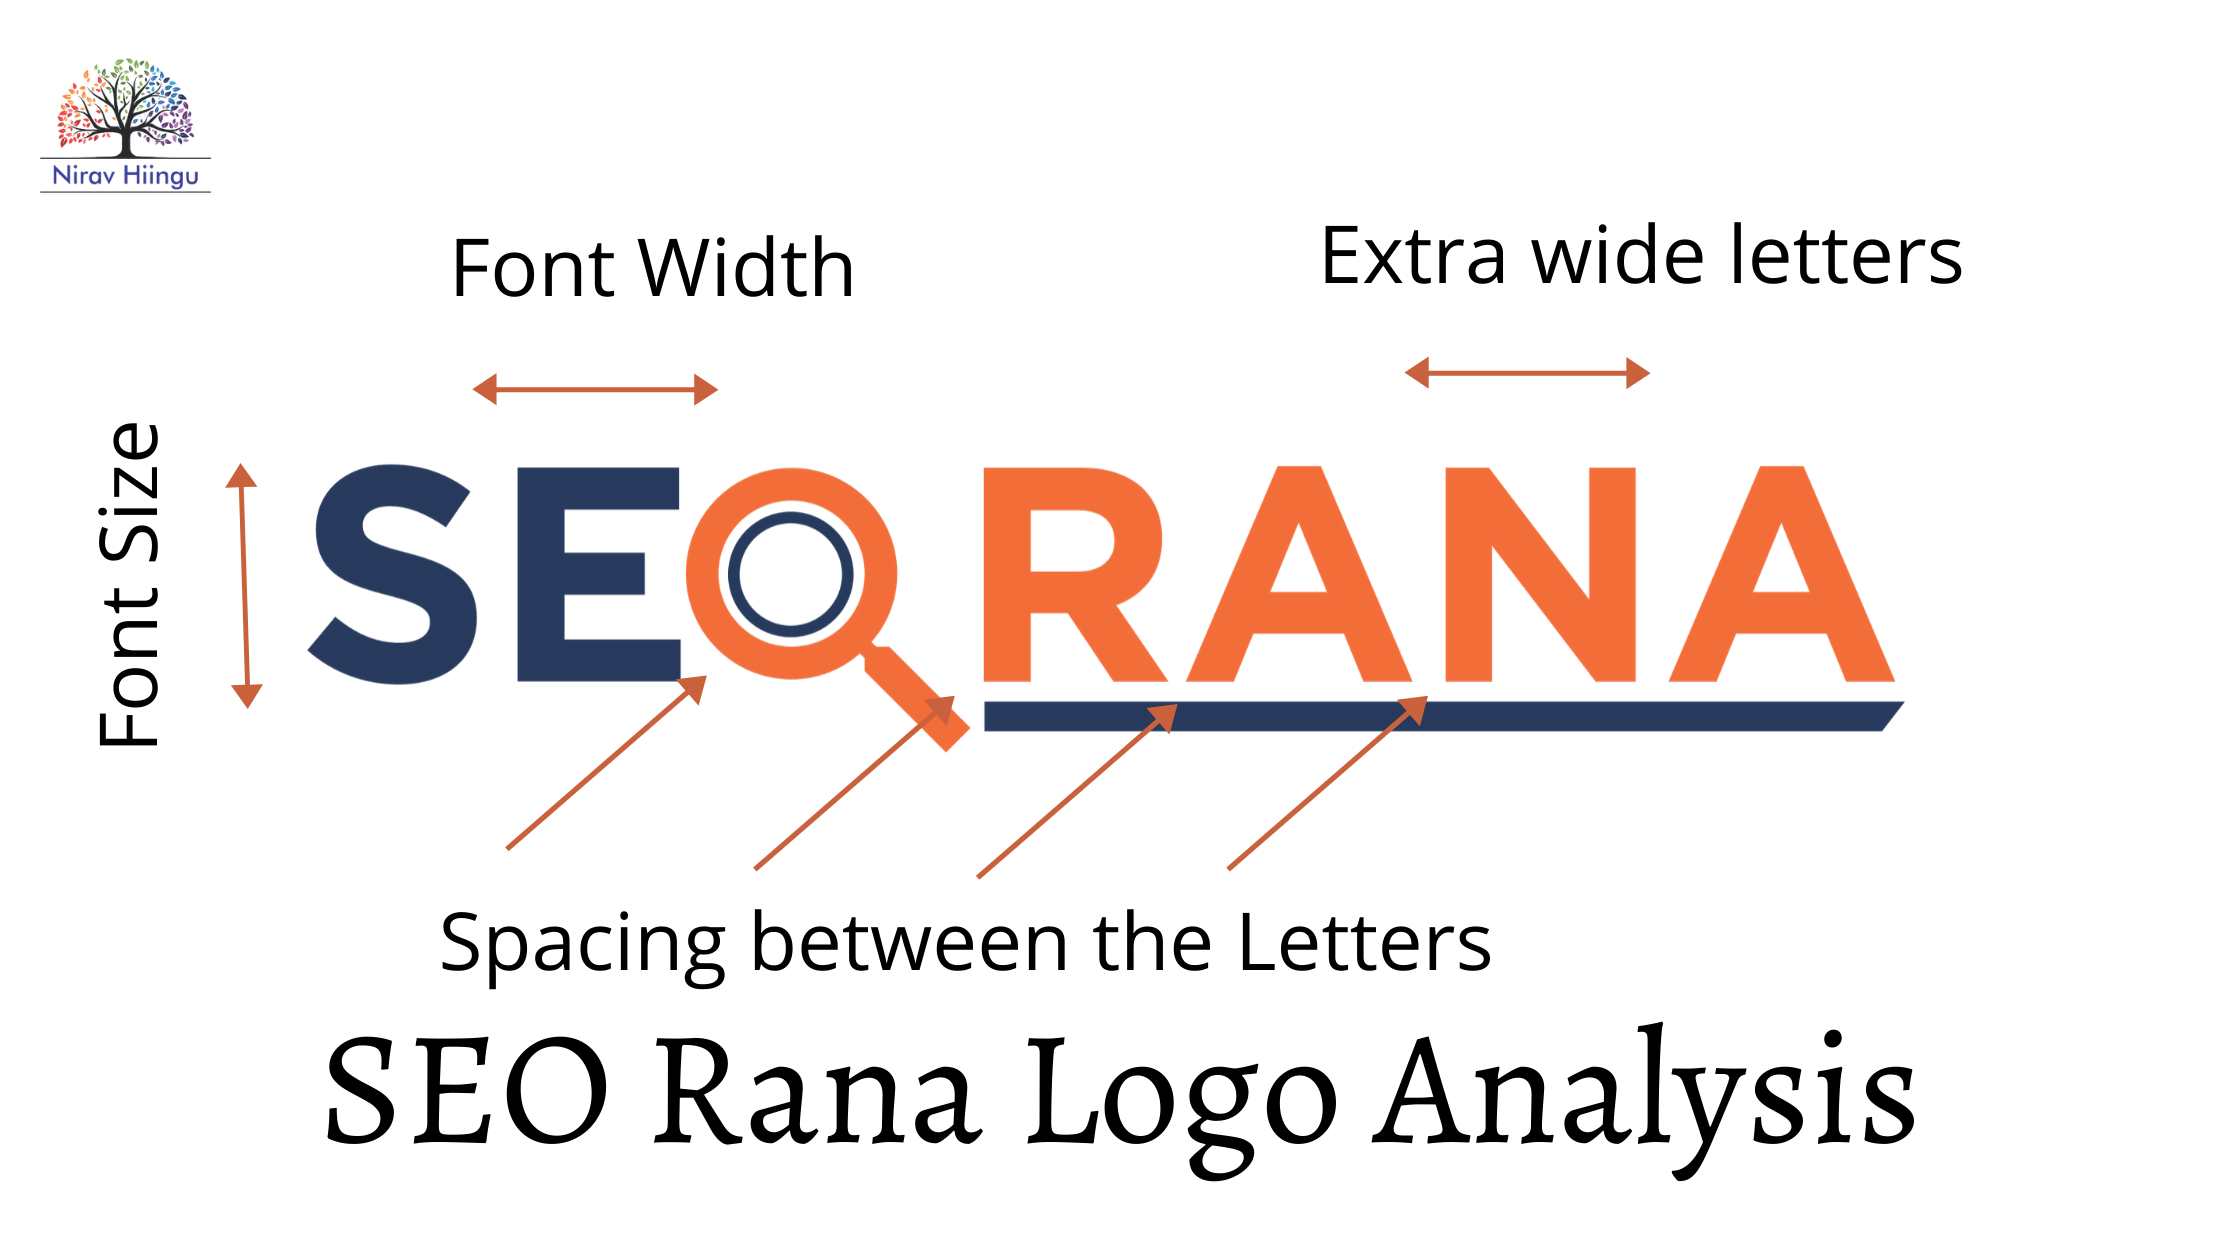 SEO RANA Logo and Name Numerology Analysis